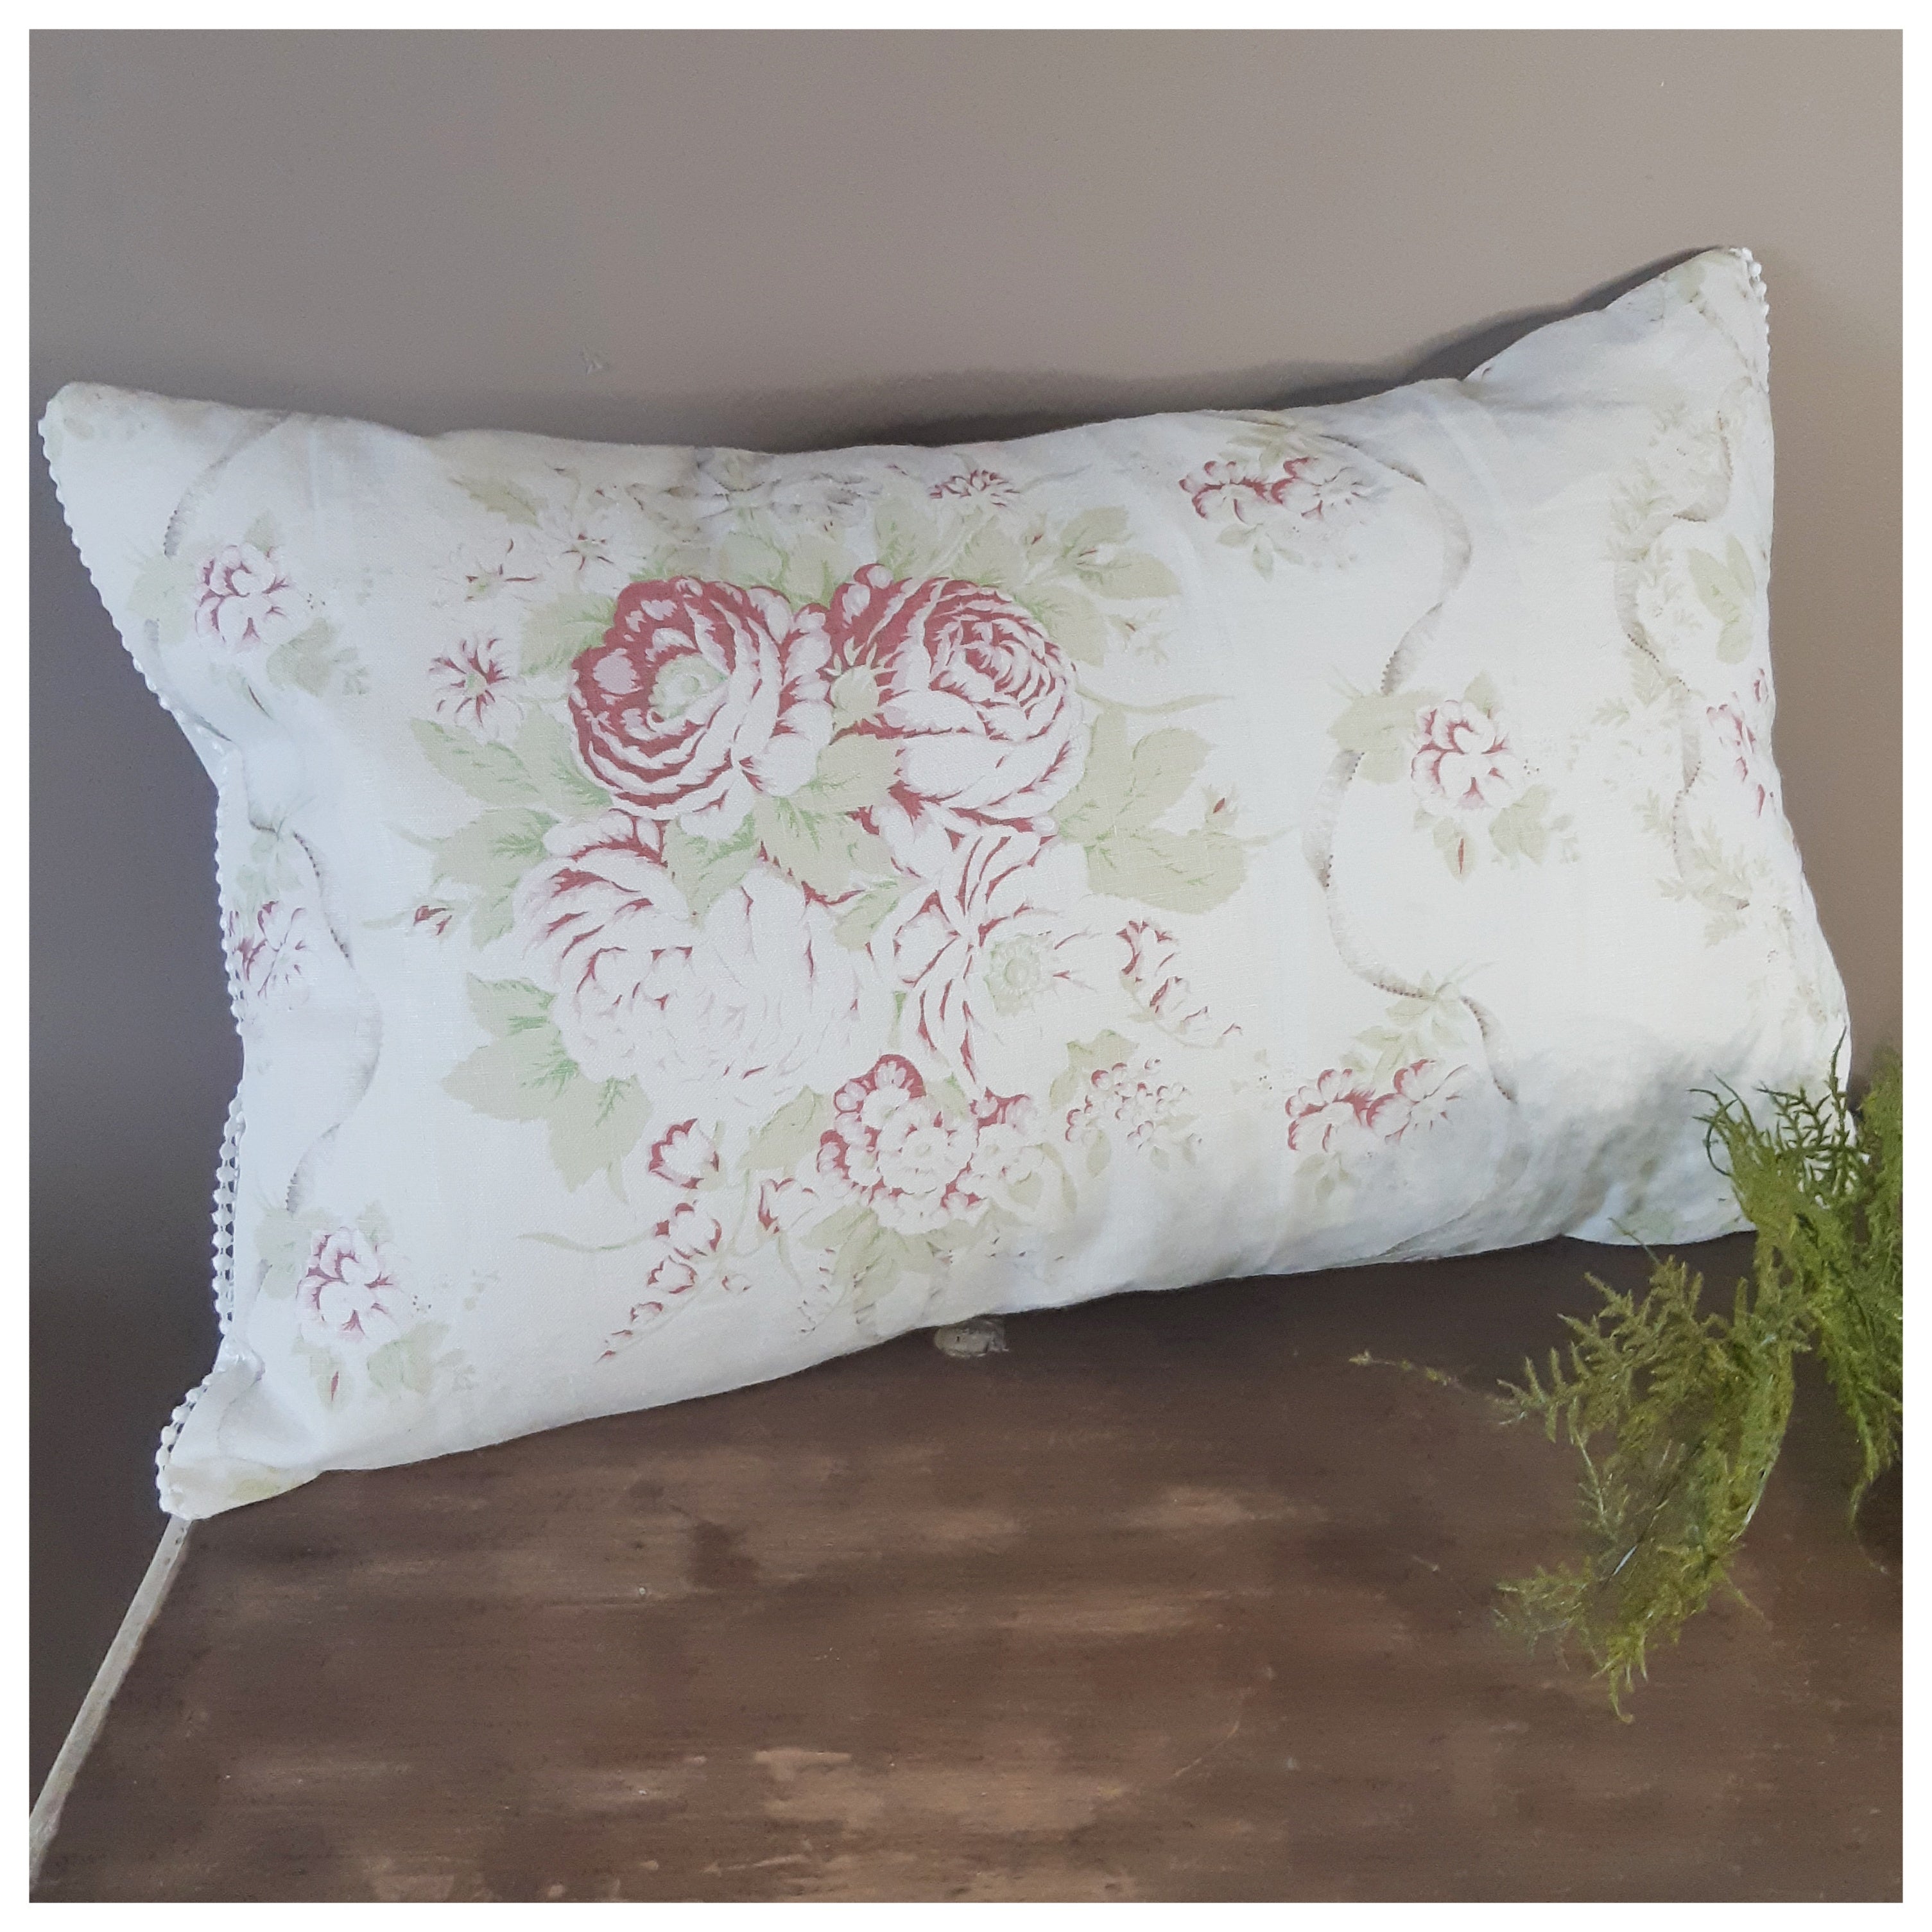 Cabbage rose throw pillow